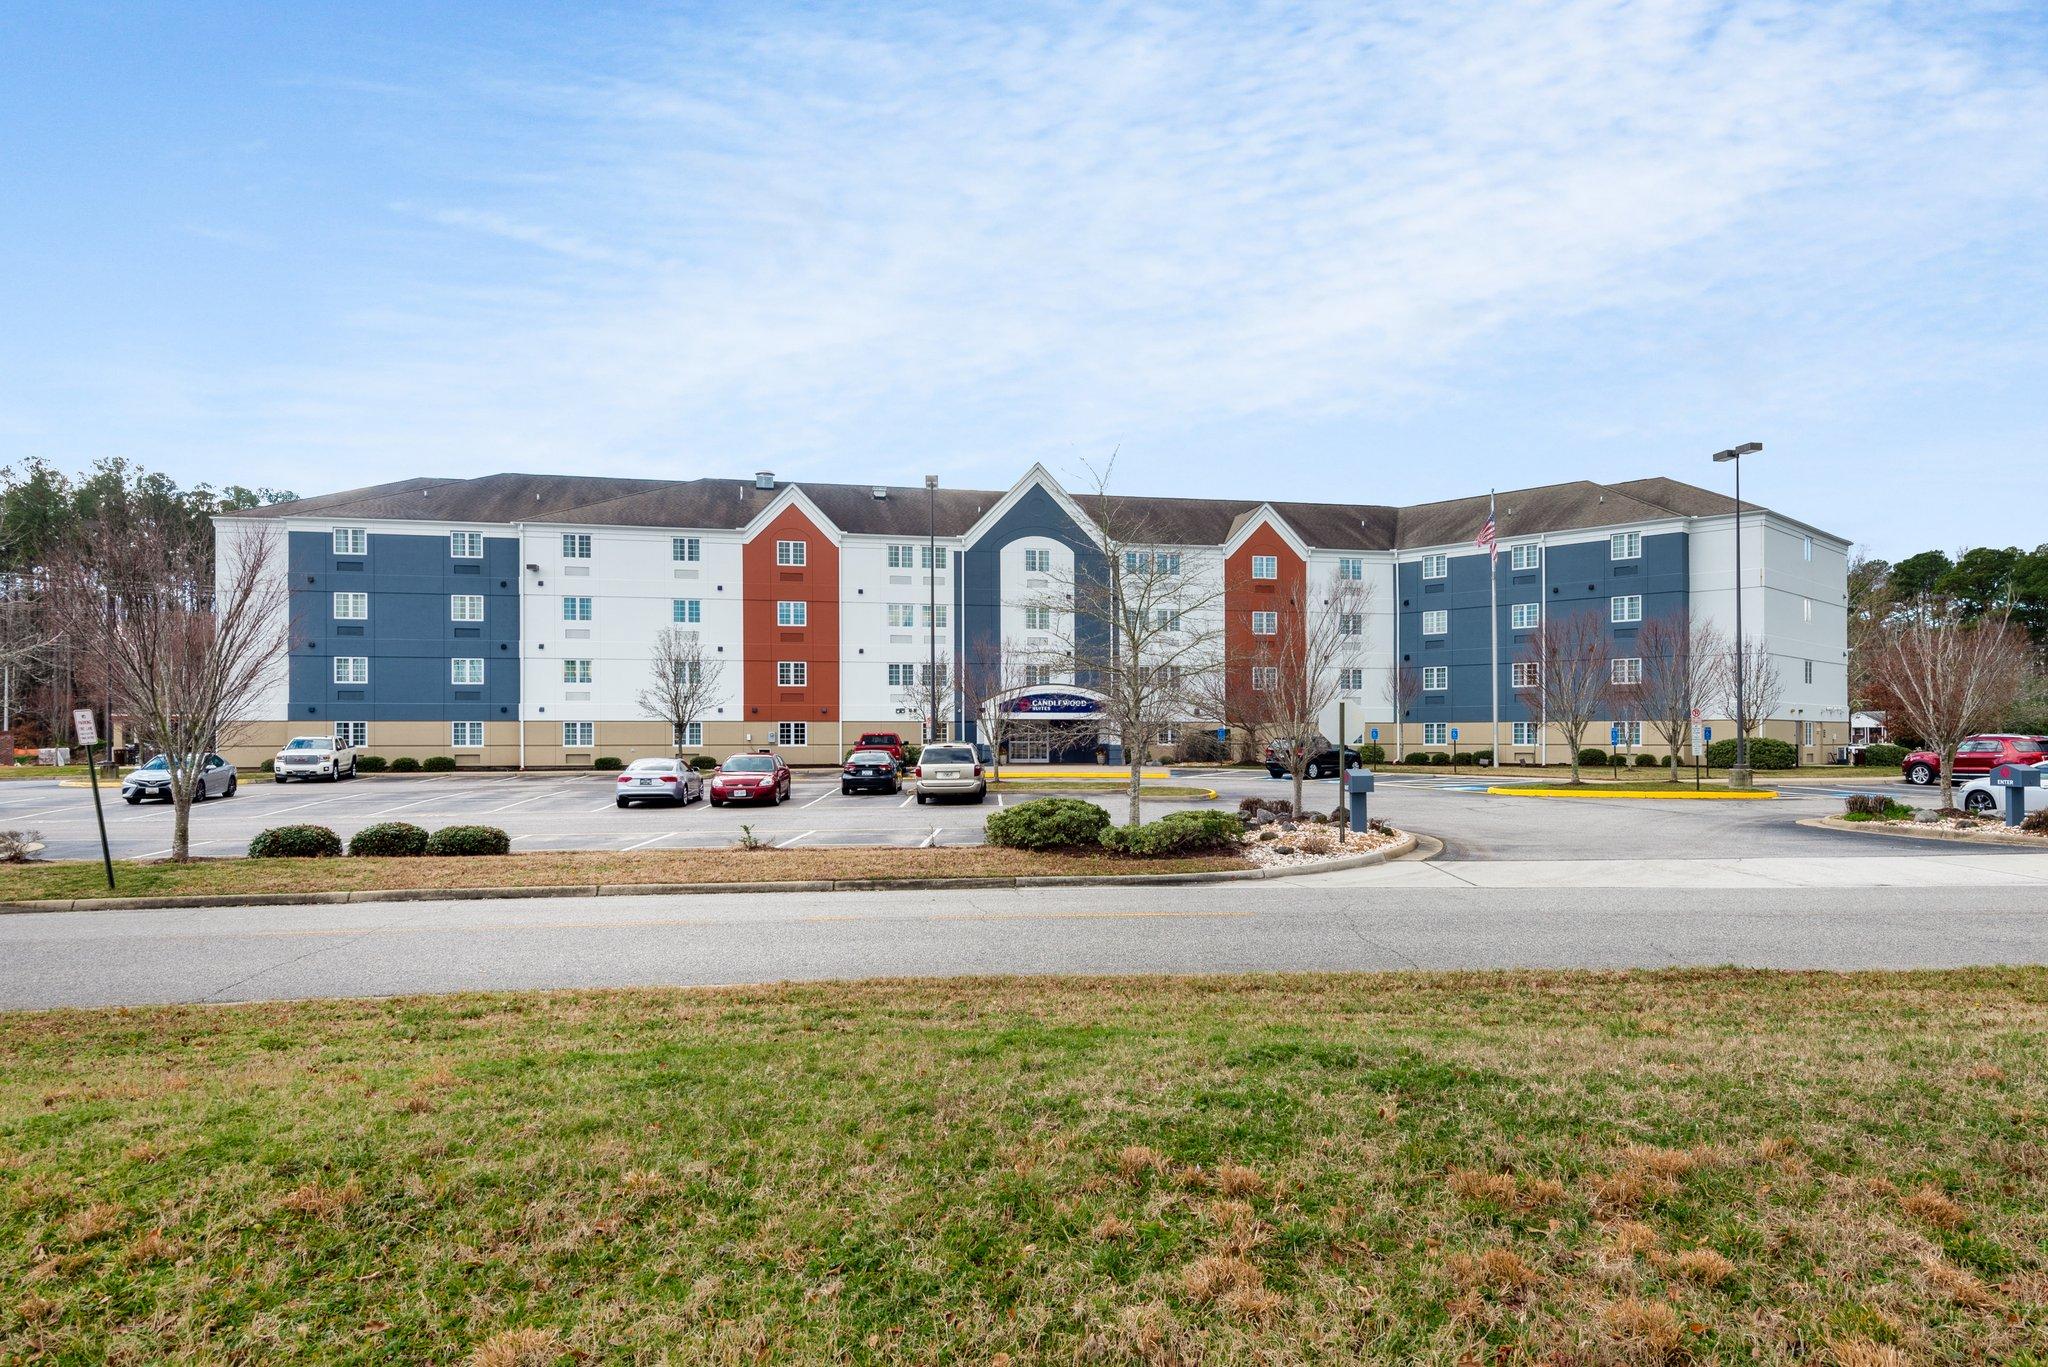 Candlewood Suites Chesapeake/Suffolk in Chesapeake, VA